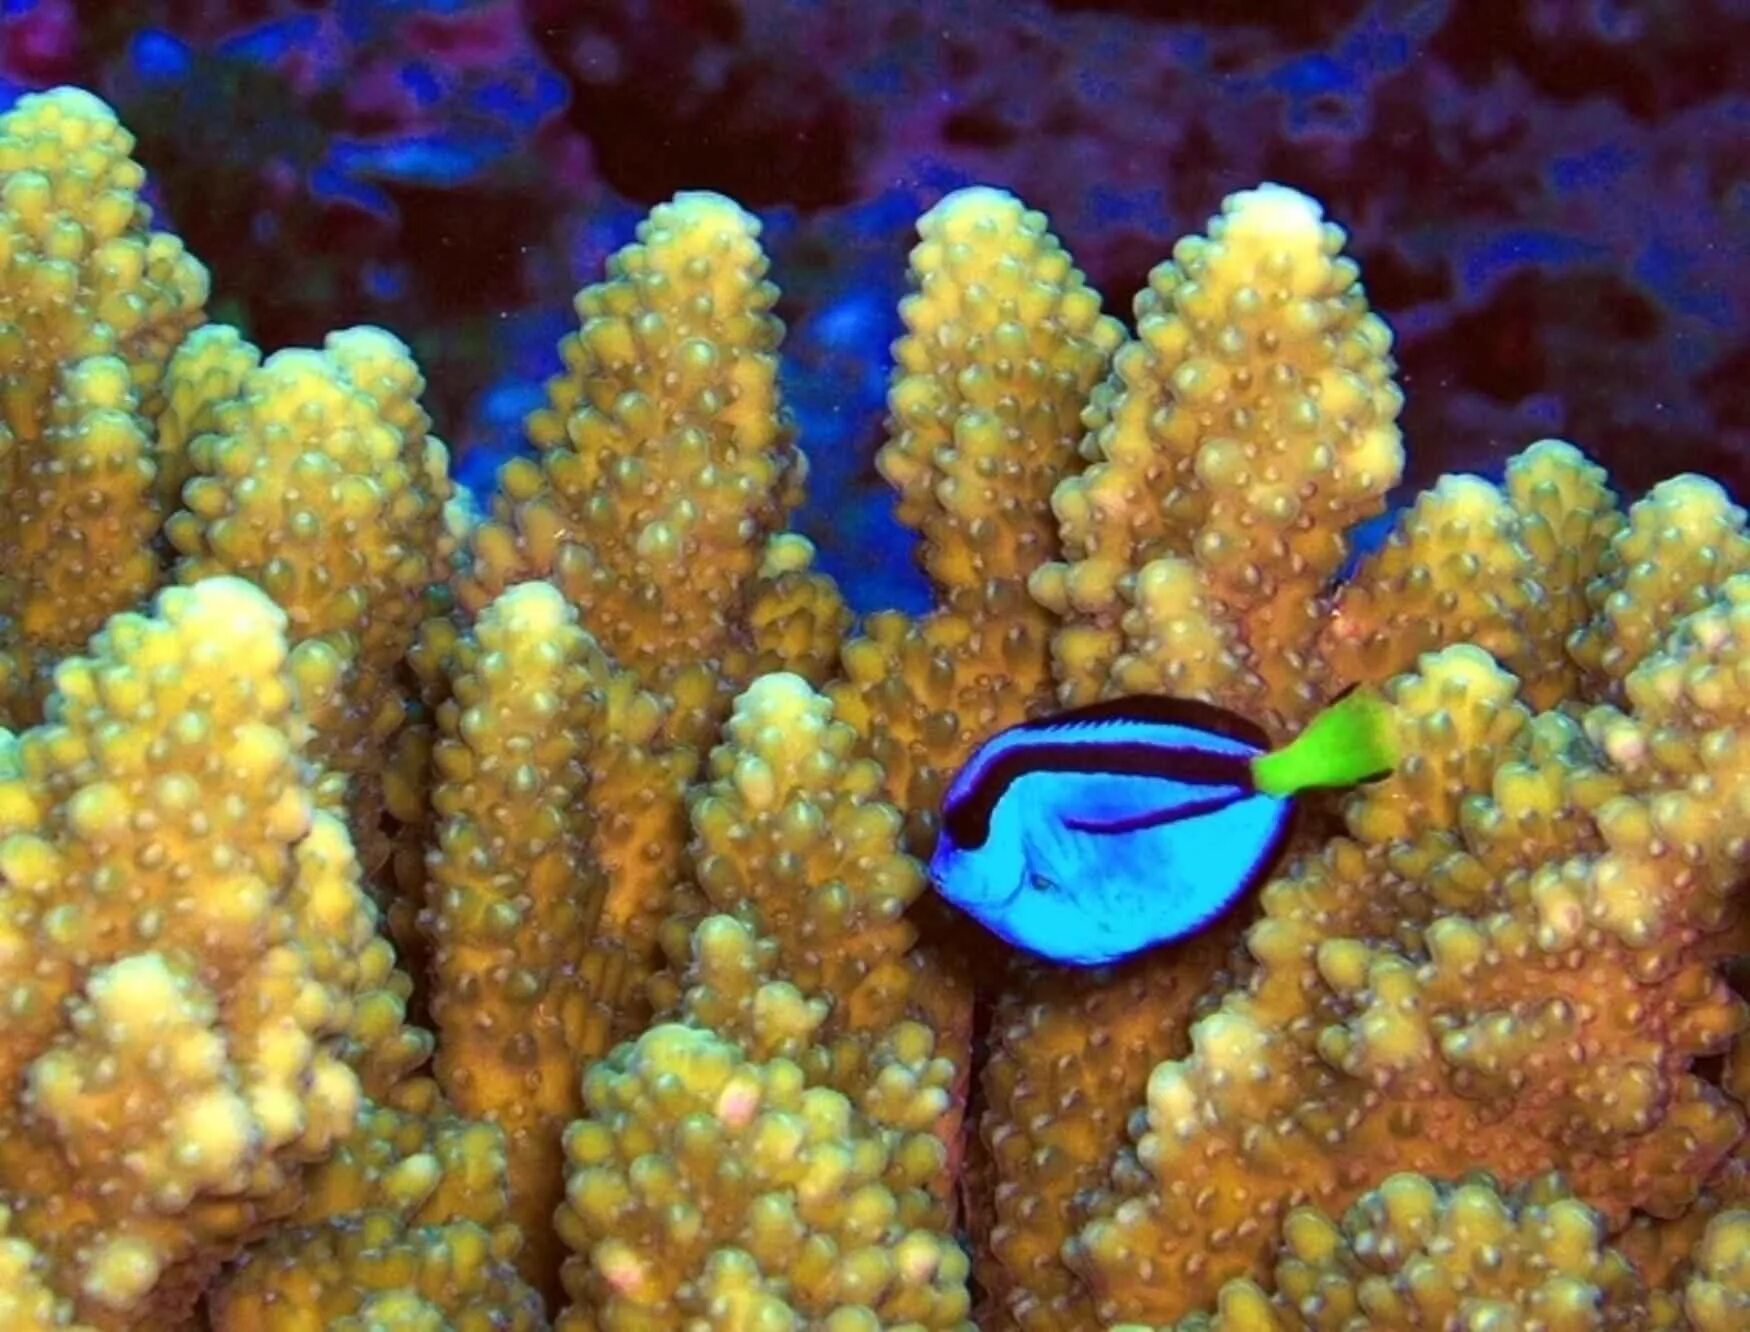 Рыбка коралловых рифов. Голубой хирург (Paracanthurus hepatus). Рыба Еллоу танг. Рыба Тай риф. Рыбки коралловых рифов.